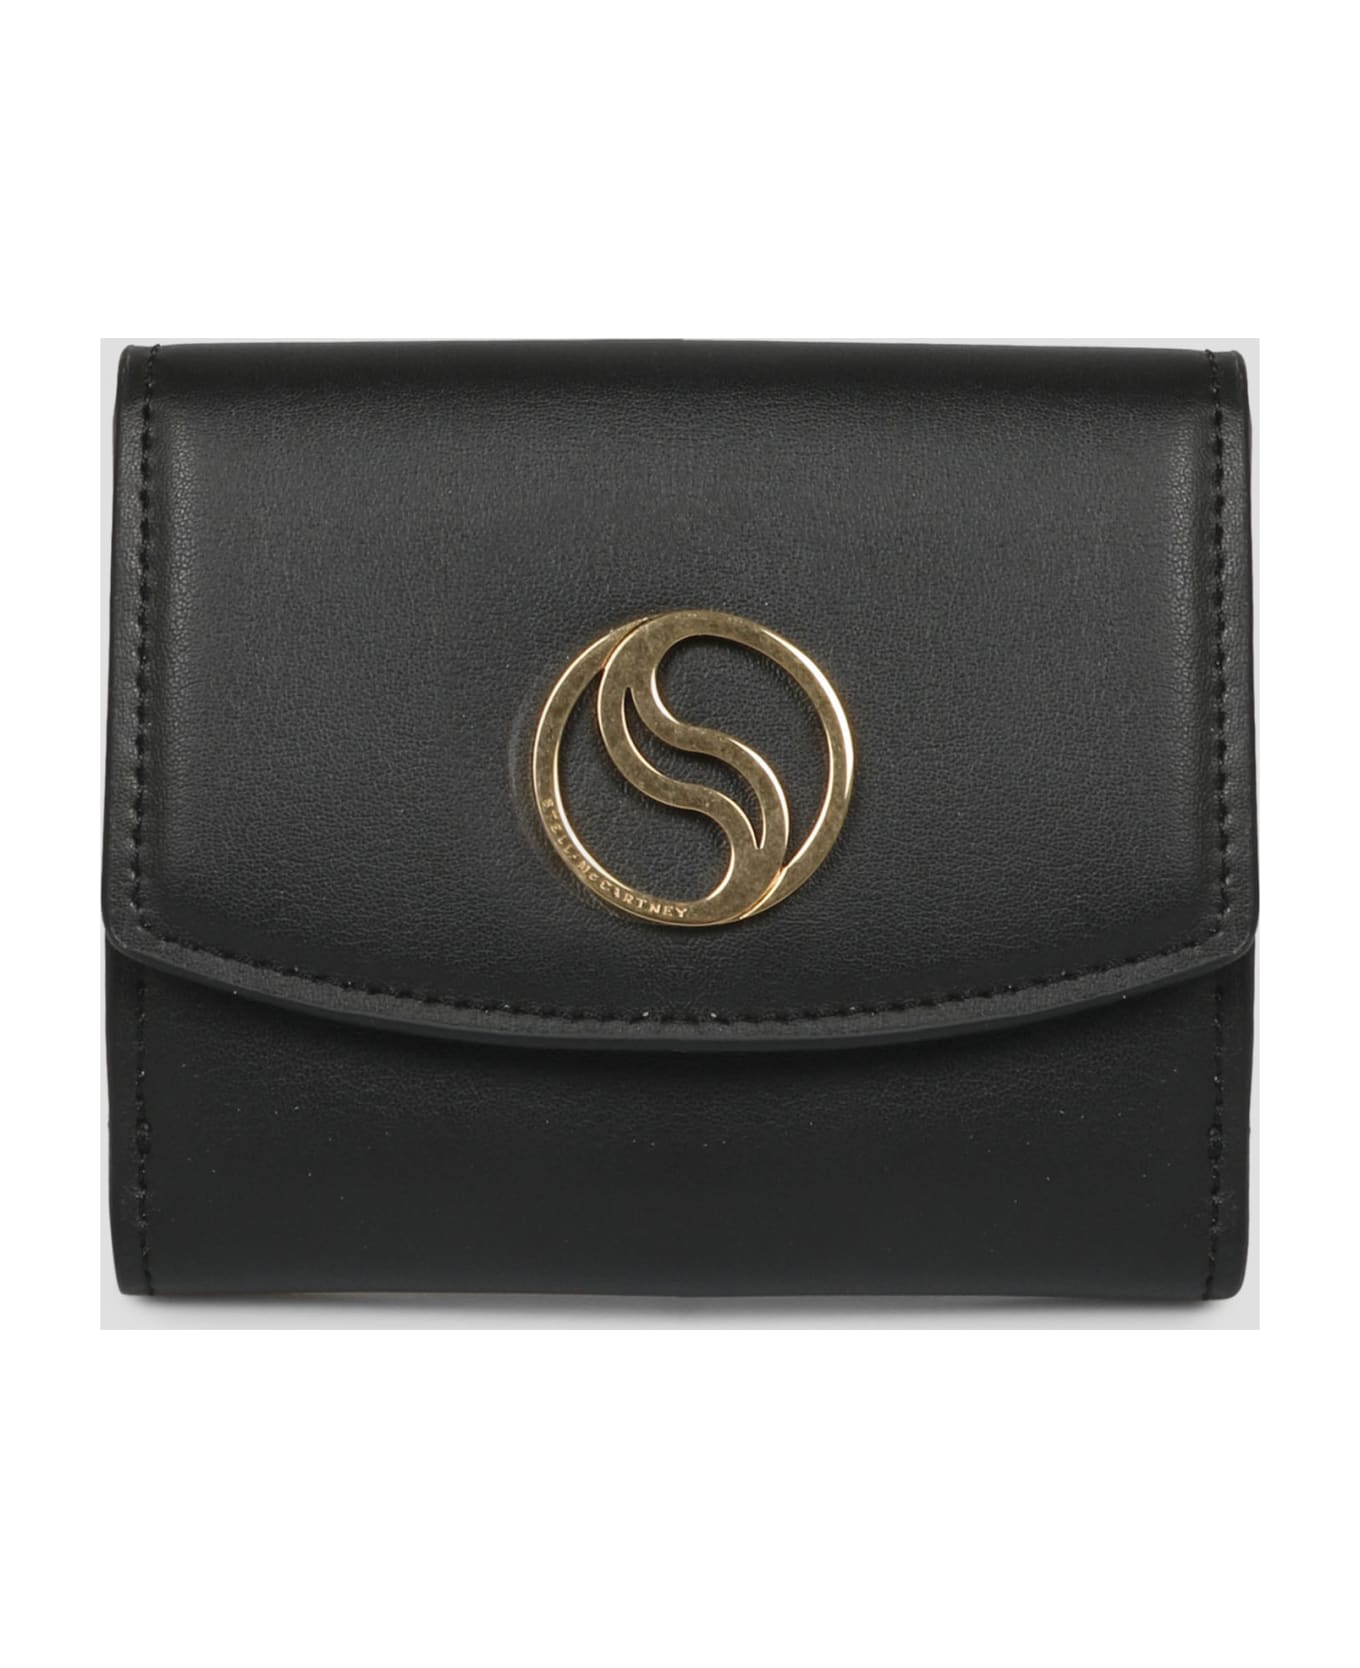 Stella McCartney S-wave Small Flap Wallet - Black